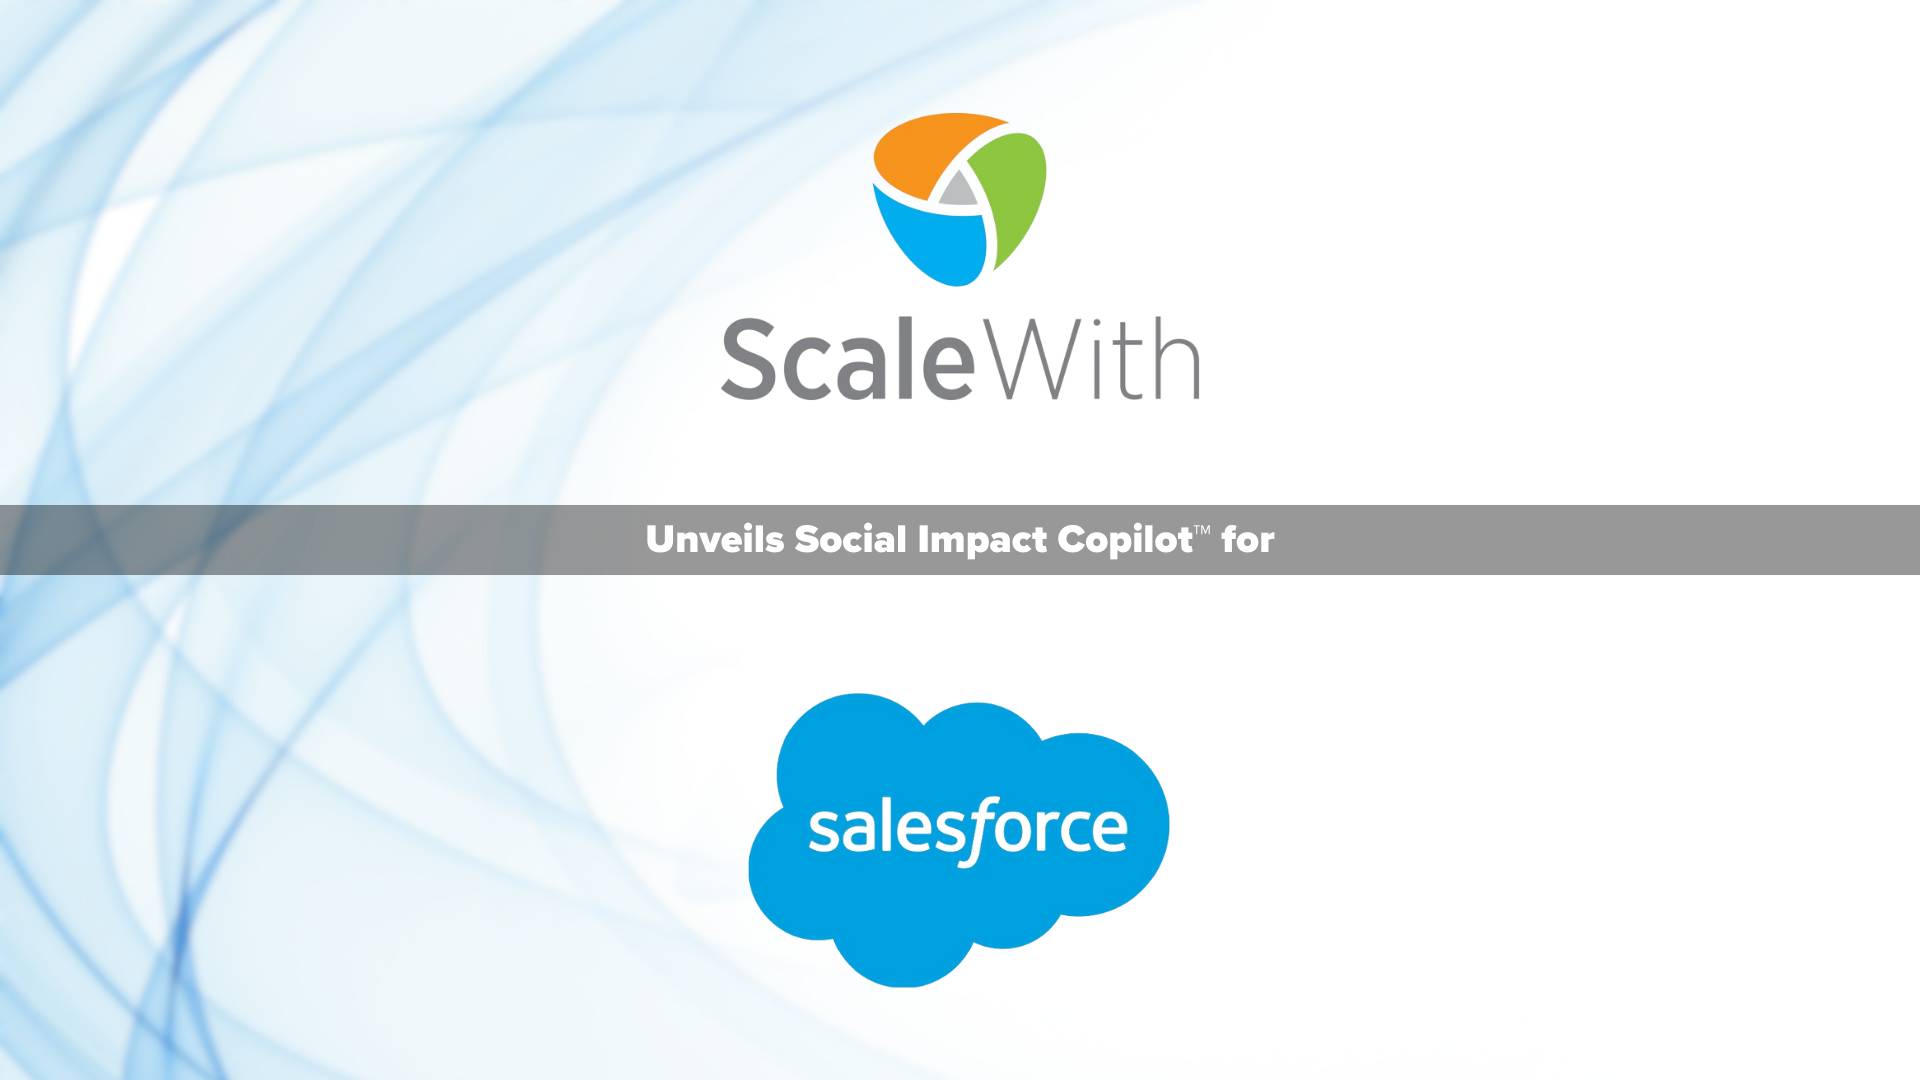 ScaleWith Unveils Social Impact Copilot™ for Salesforce